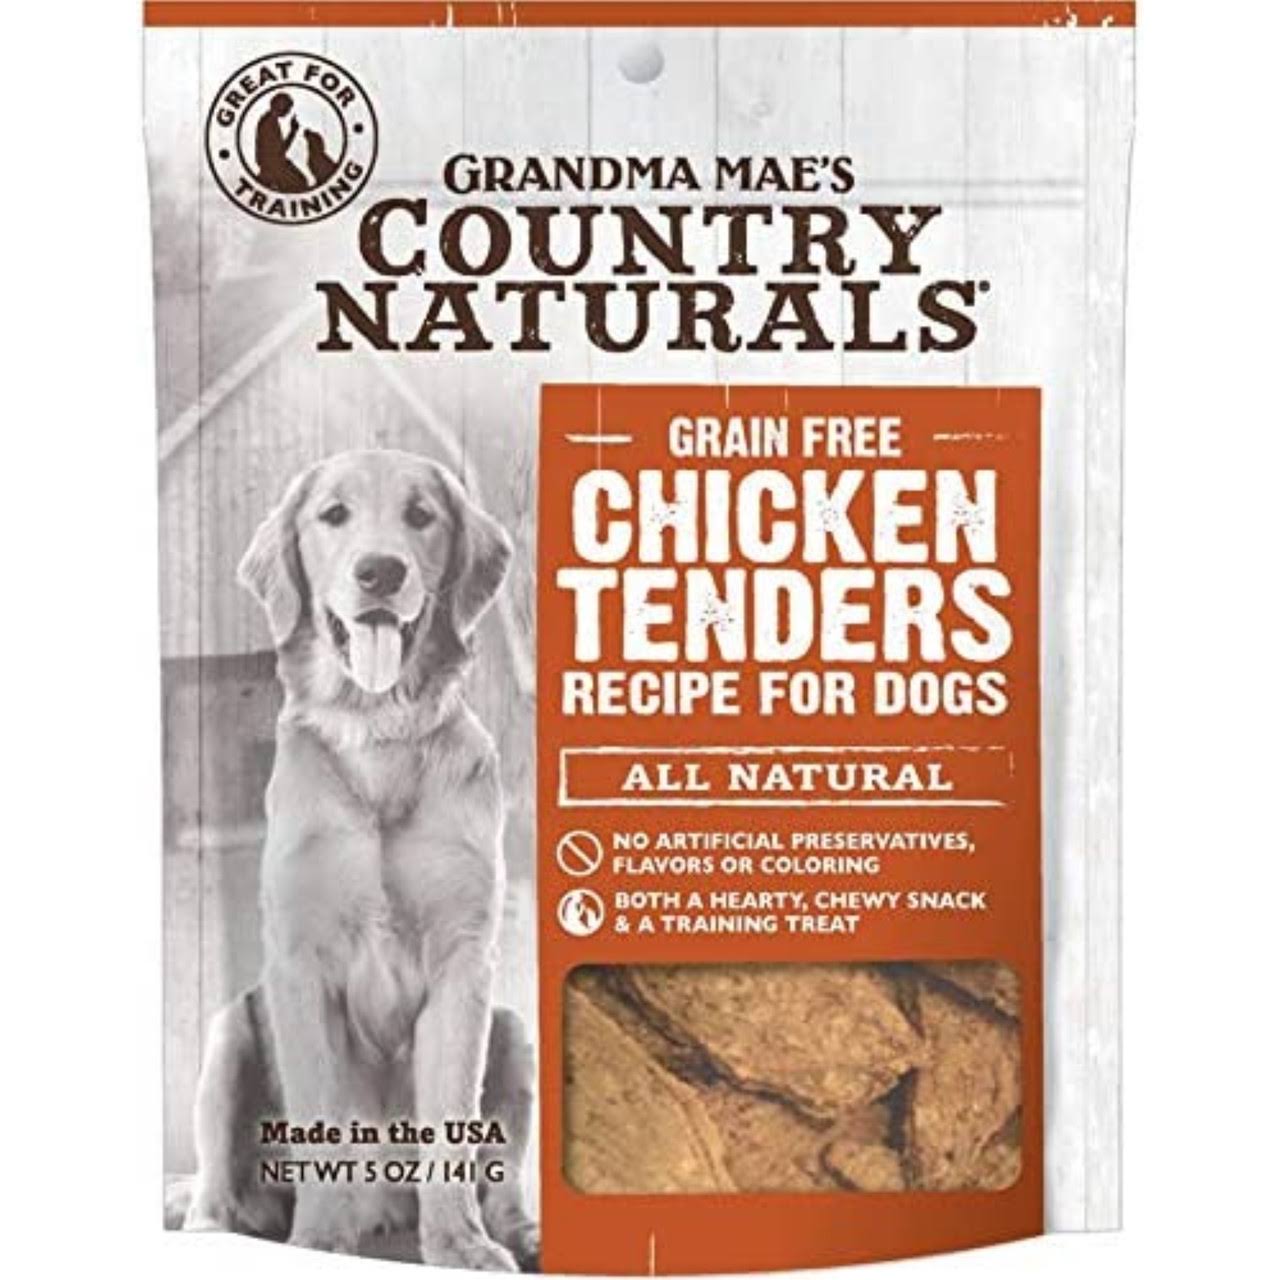 Grandma Mae's Country Naturals Grain-Free Chicken Tenders Dog Treats, 5-oz